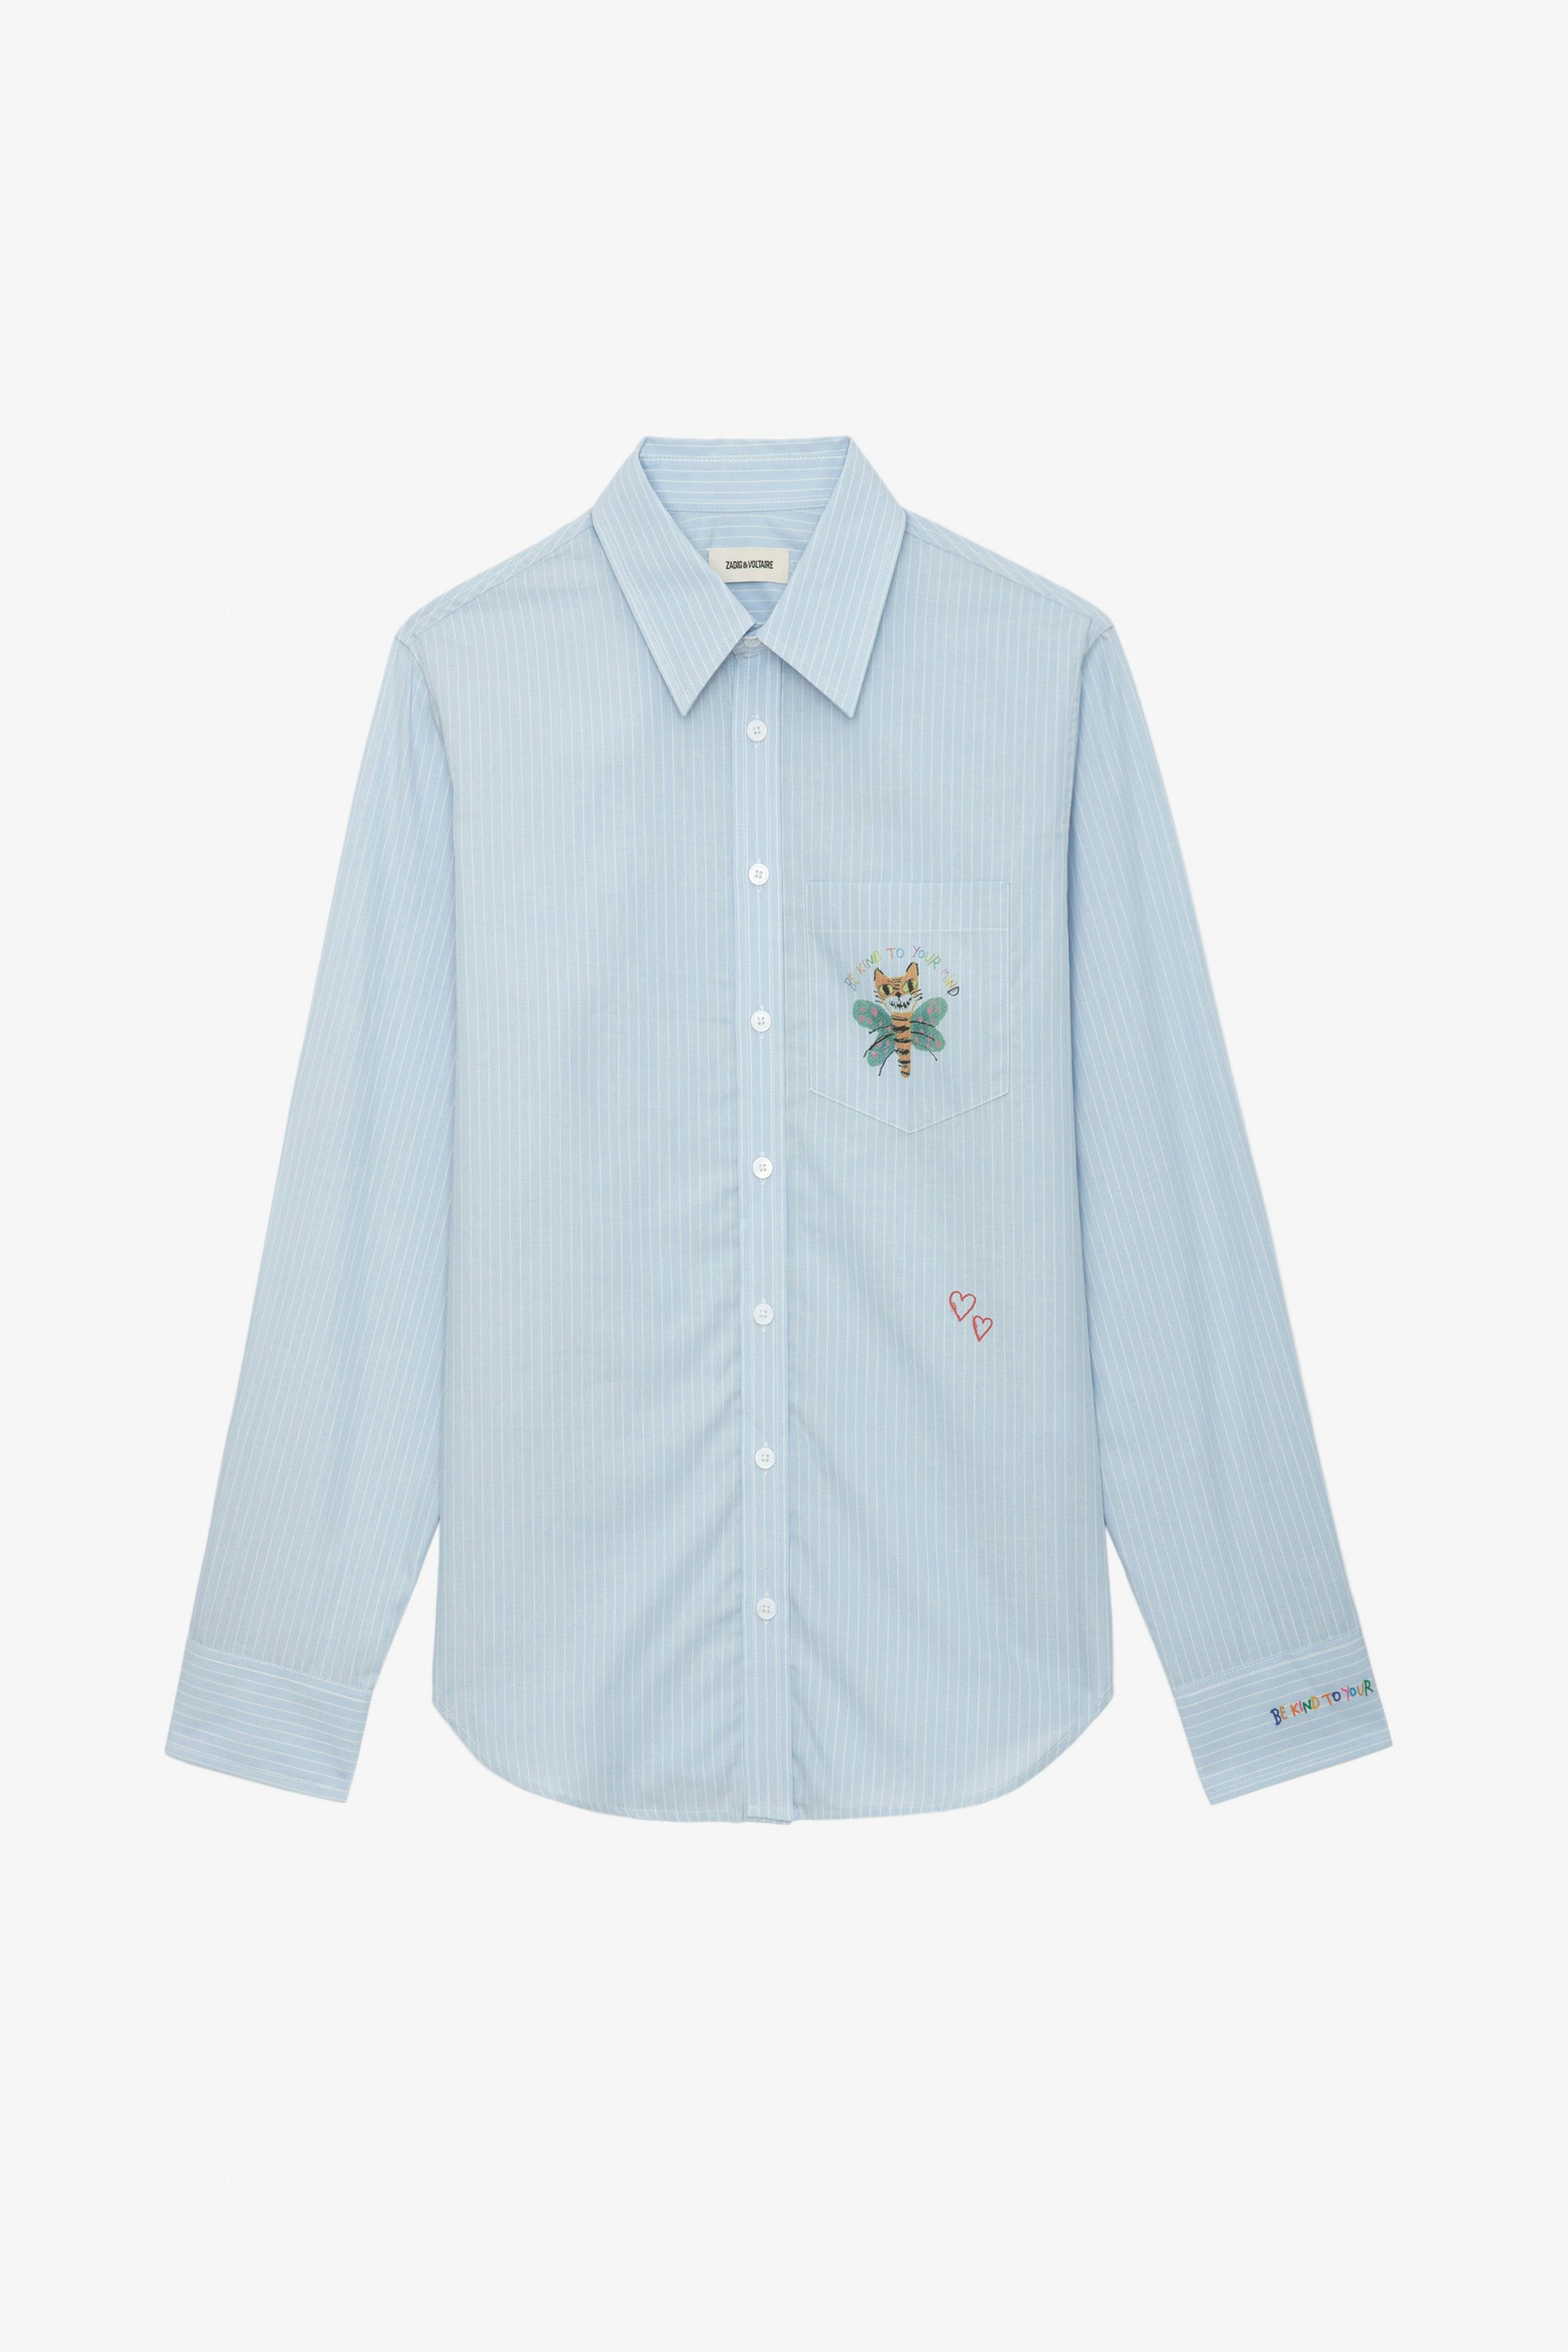 Taskiz Shirt - Blue cotton long-sleeved shirt with stripes and customised details designed by Humberto Cruz.